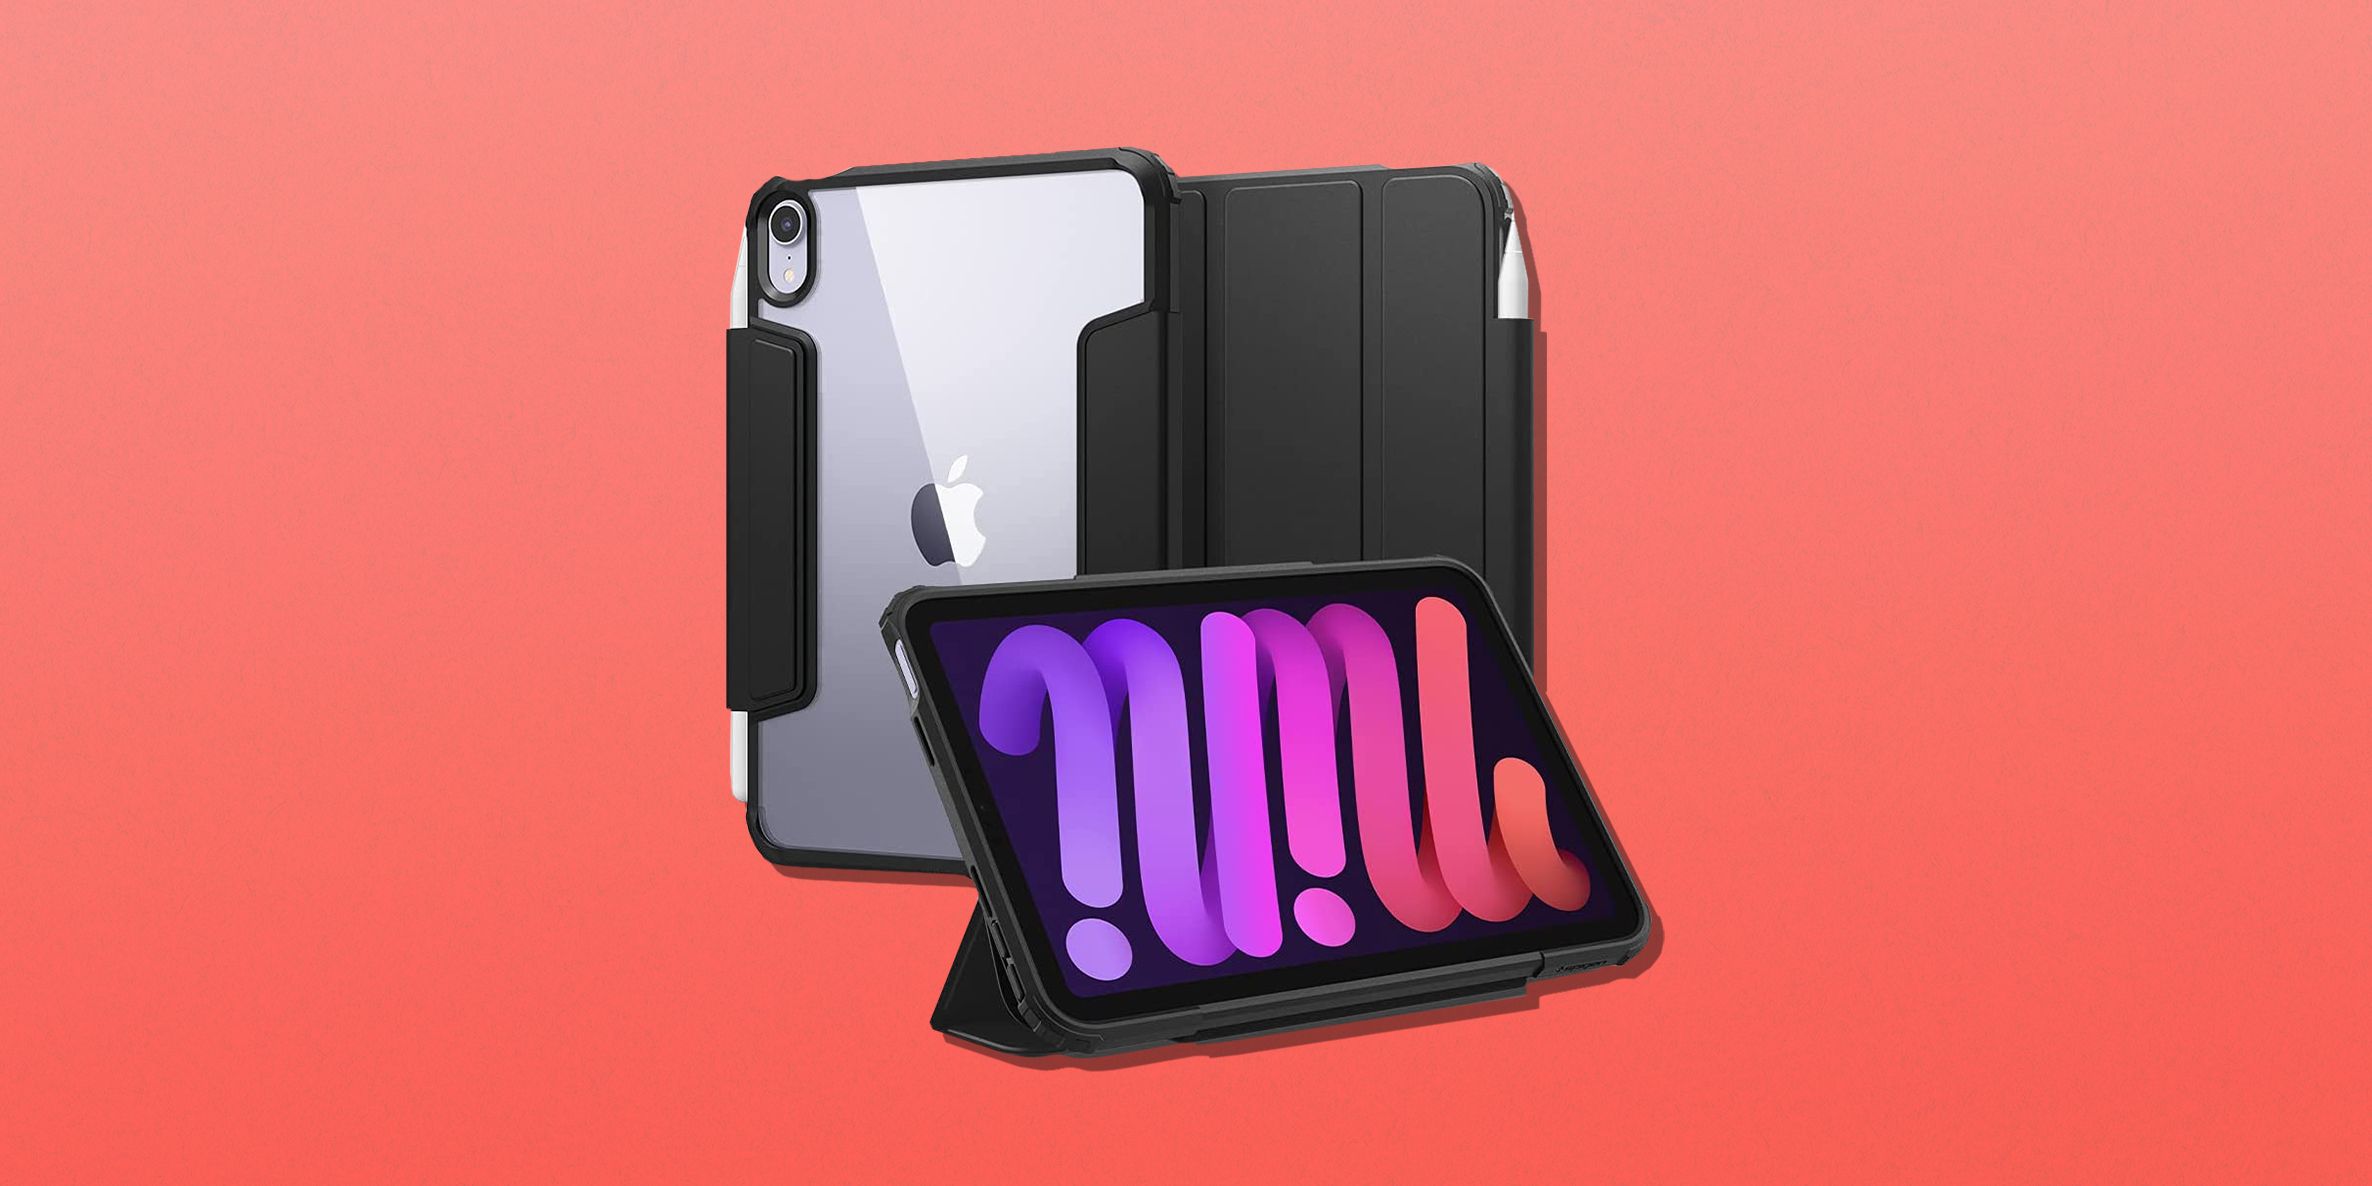 cool ipad mini cases for girls